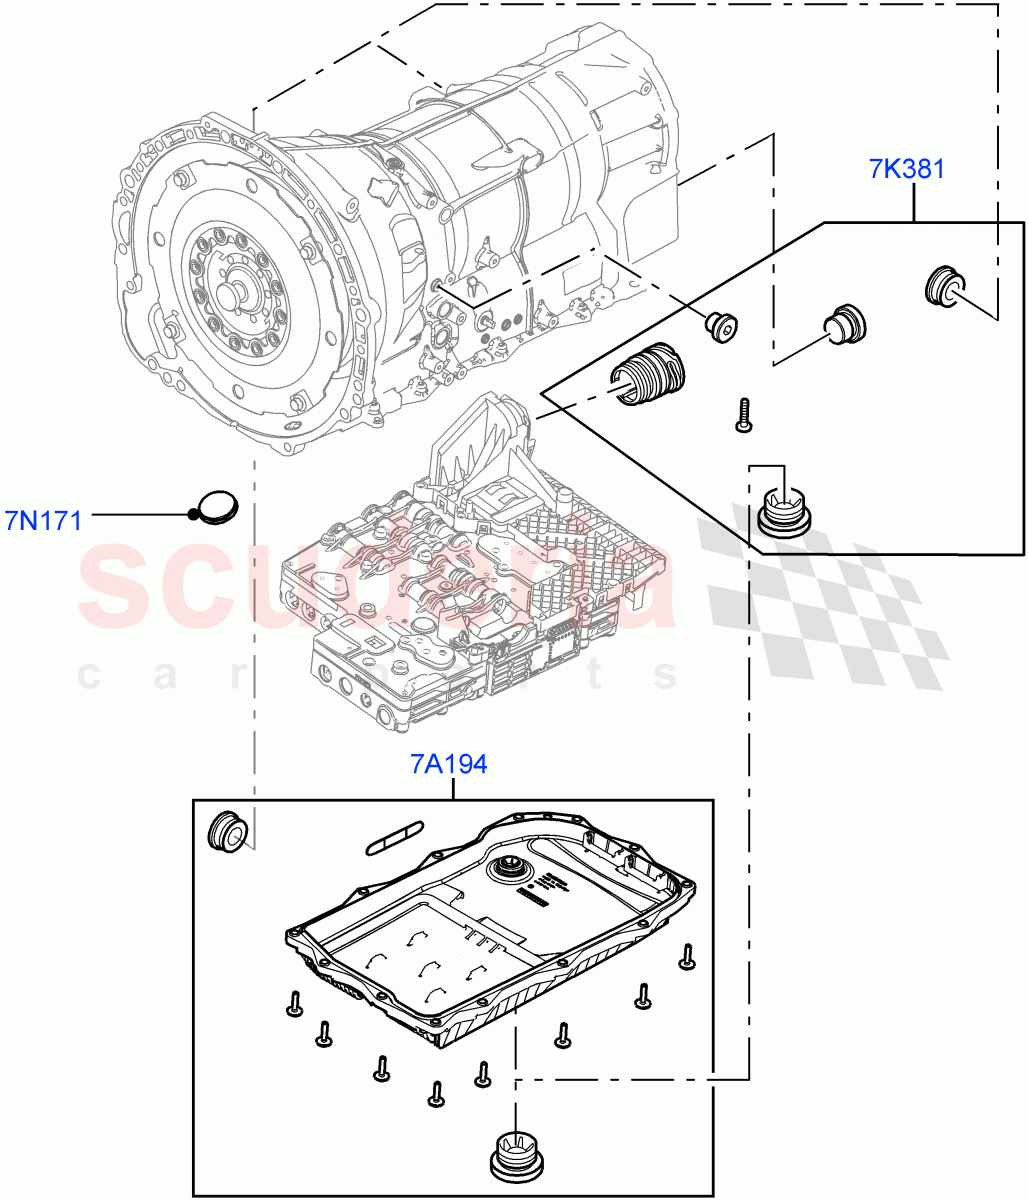 Transmission External Components(3.0L DOHC GDI SC V6 PETROL,8 Speed Auto Trans ZF 8HP70 4WD,3.0 V6 D Gen2 Twin Turbo) of Land Rover Land Rover Range Rover Velar (2017+) [5.0 OHC SGDI SC V8 Petrol]